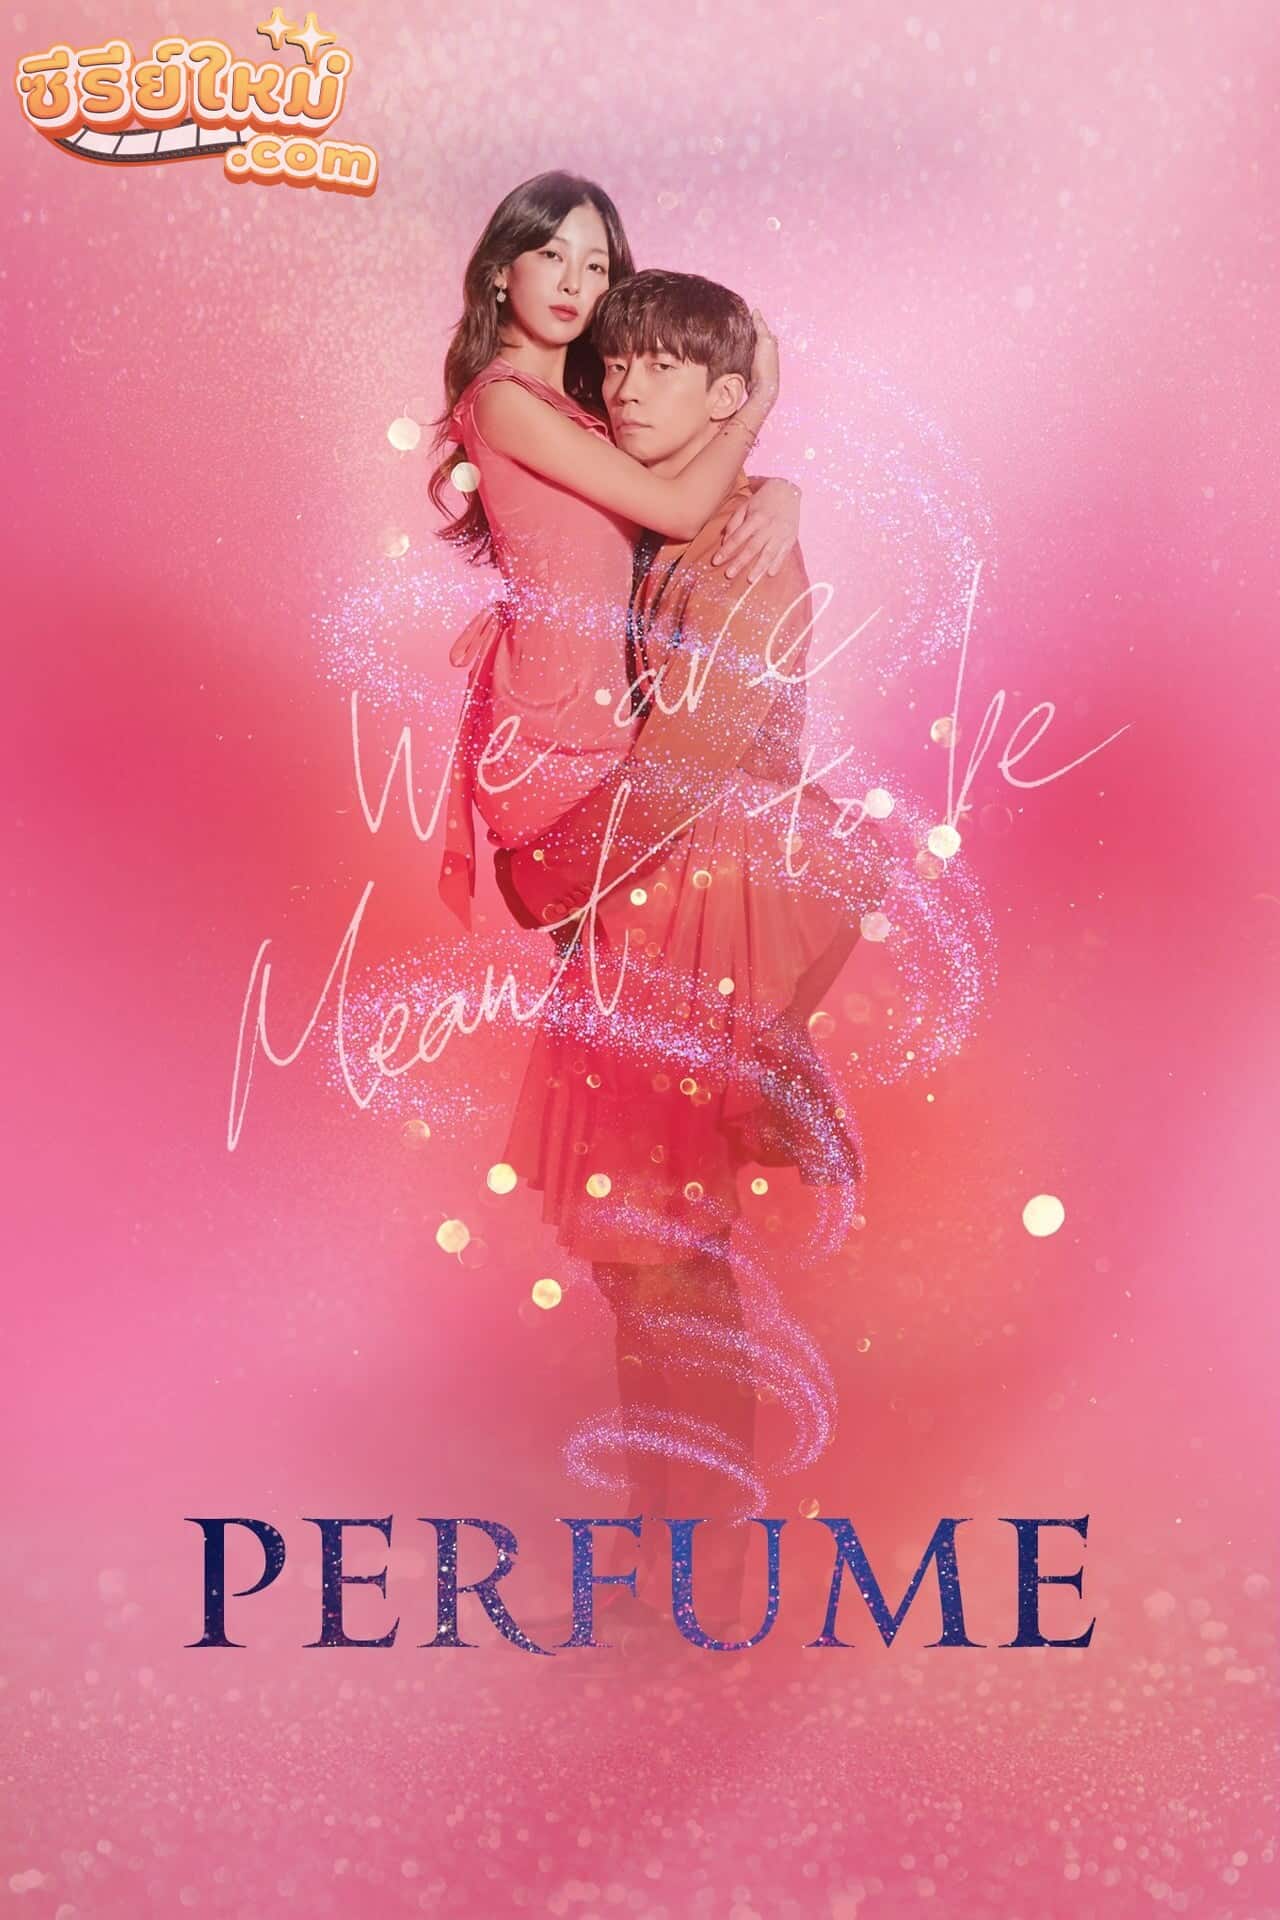 Perfume ฟุ้งรัก (2019)